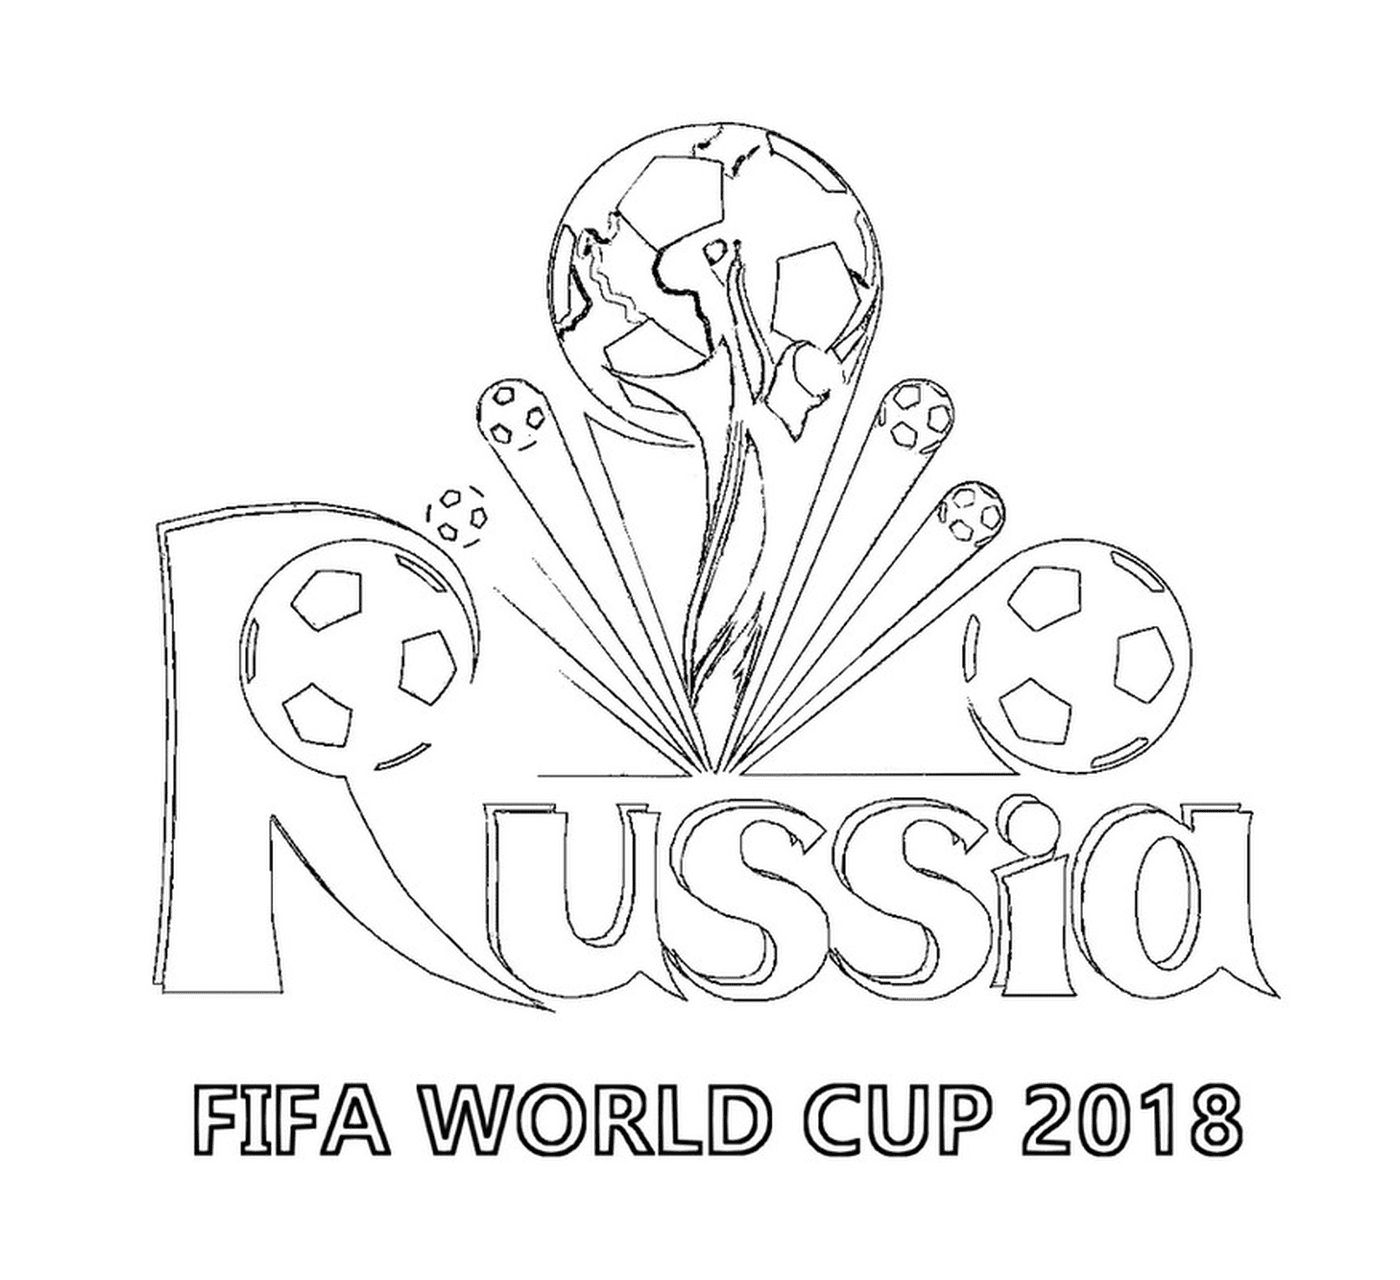  FIFA World Cup 2018, logo 